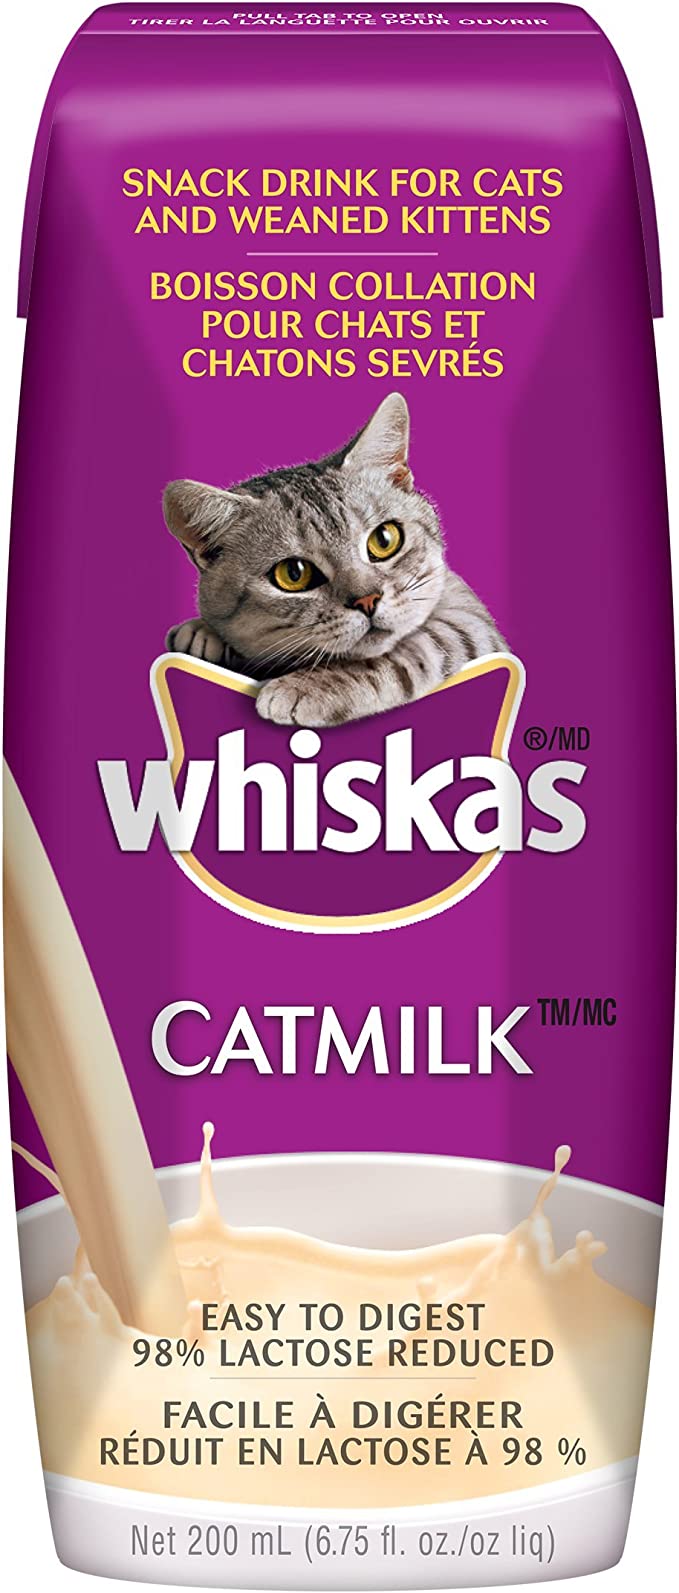 Whiskas Catmilk - 200ml